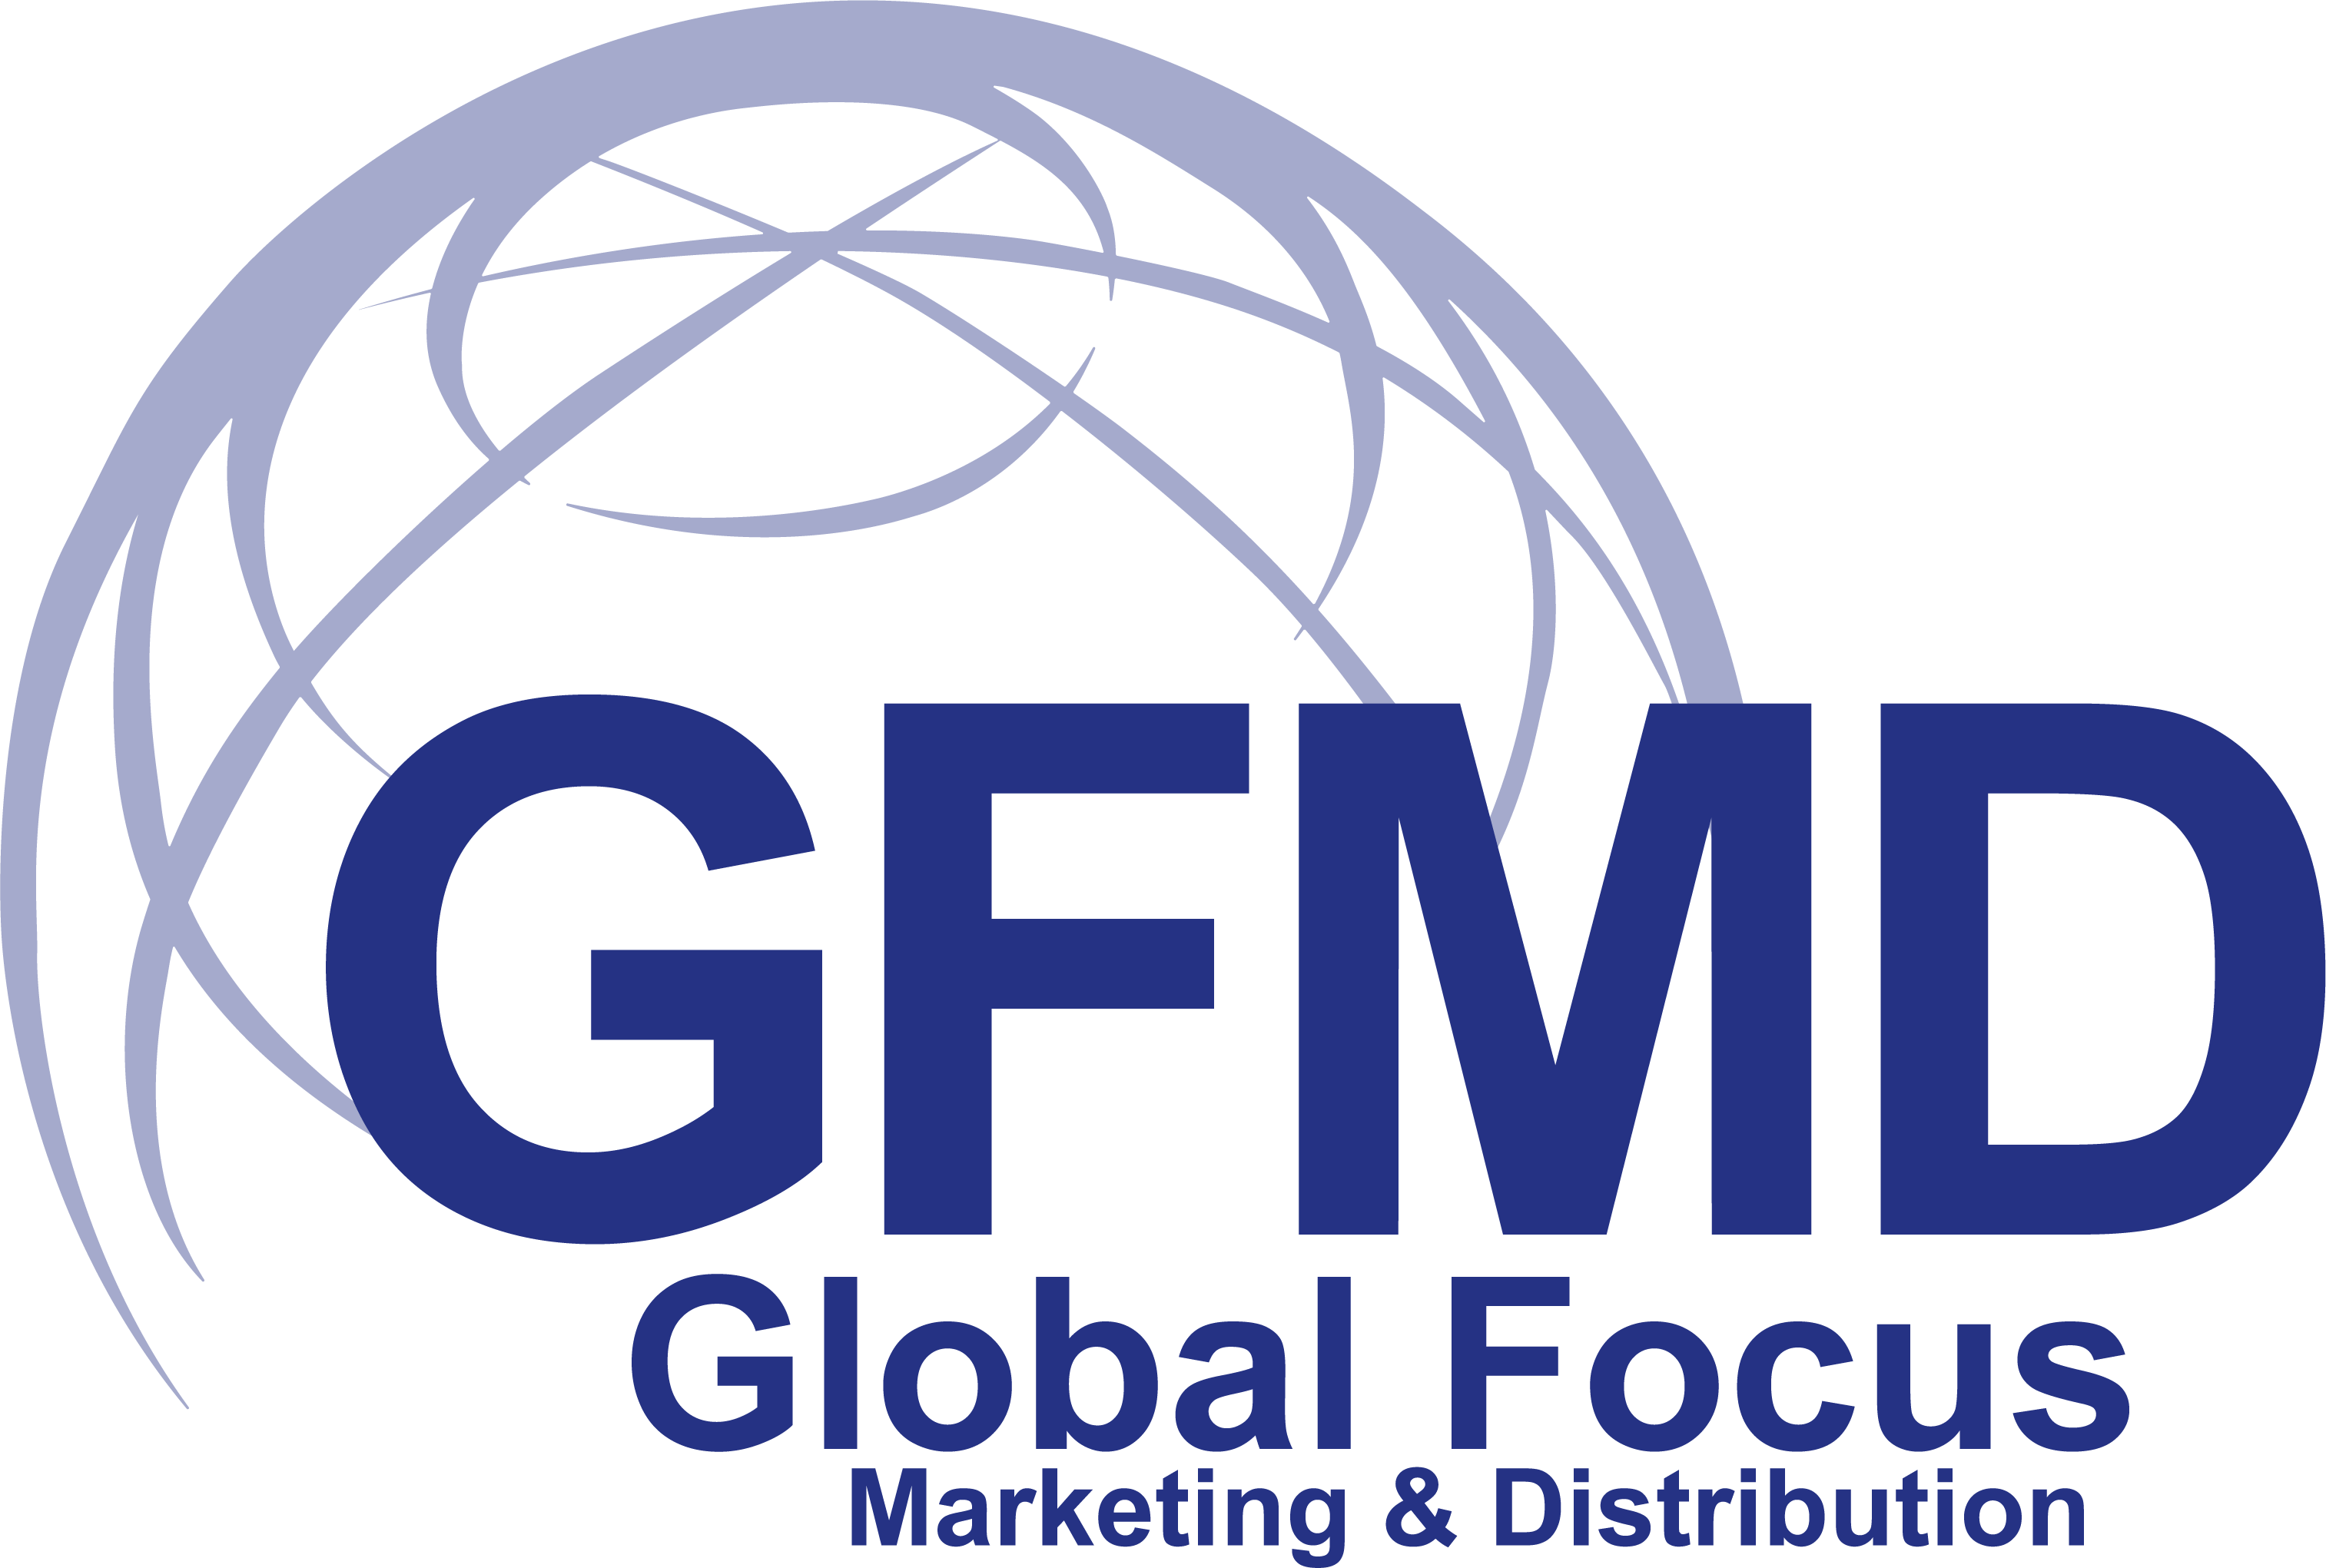 cropped-gfmd-logo-blue.png